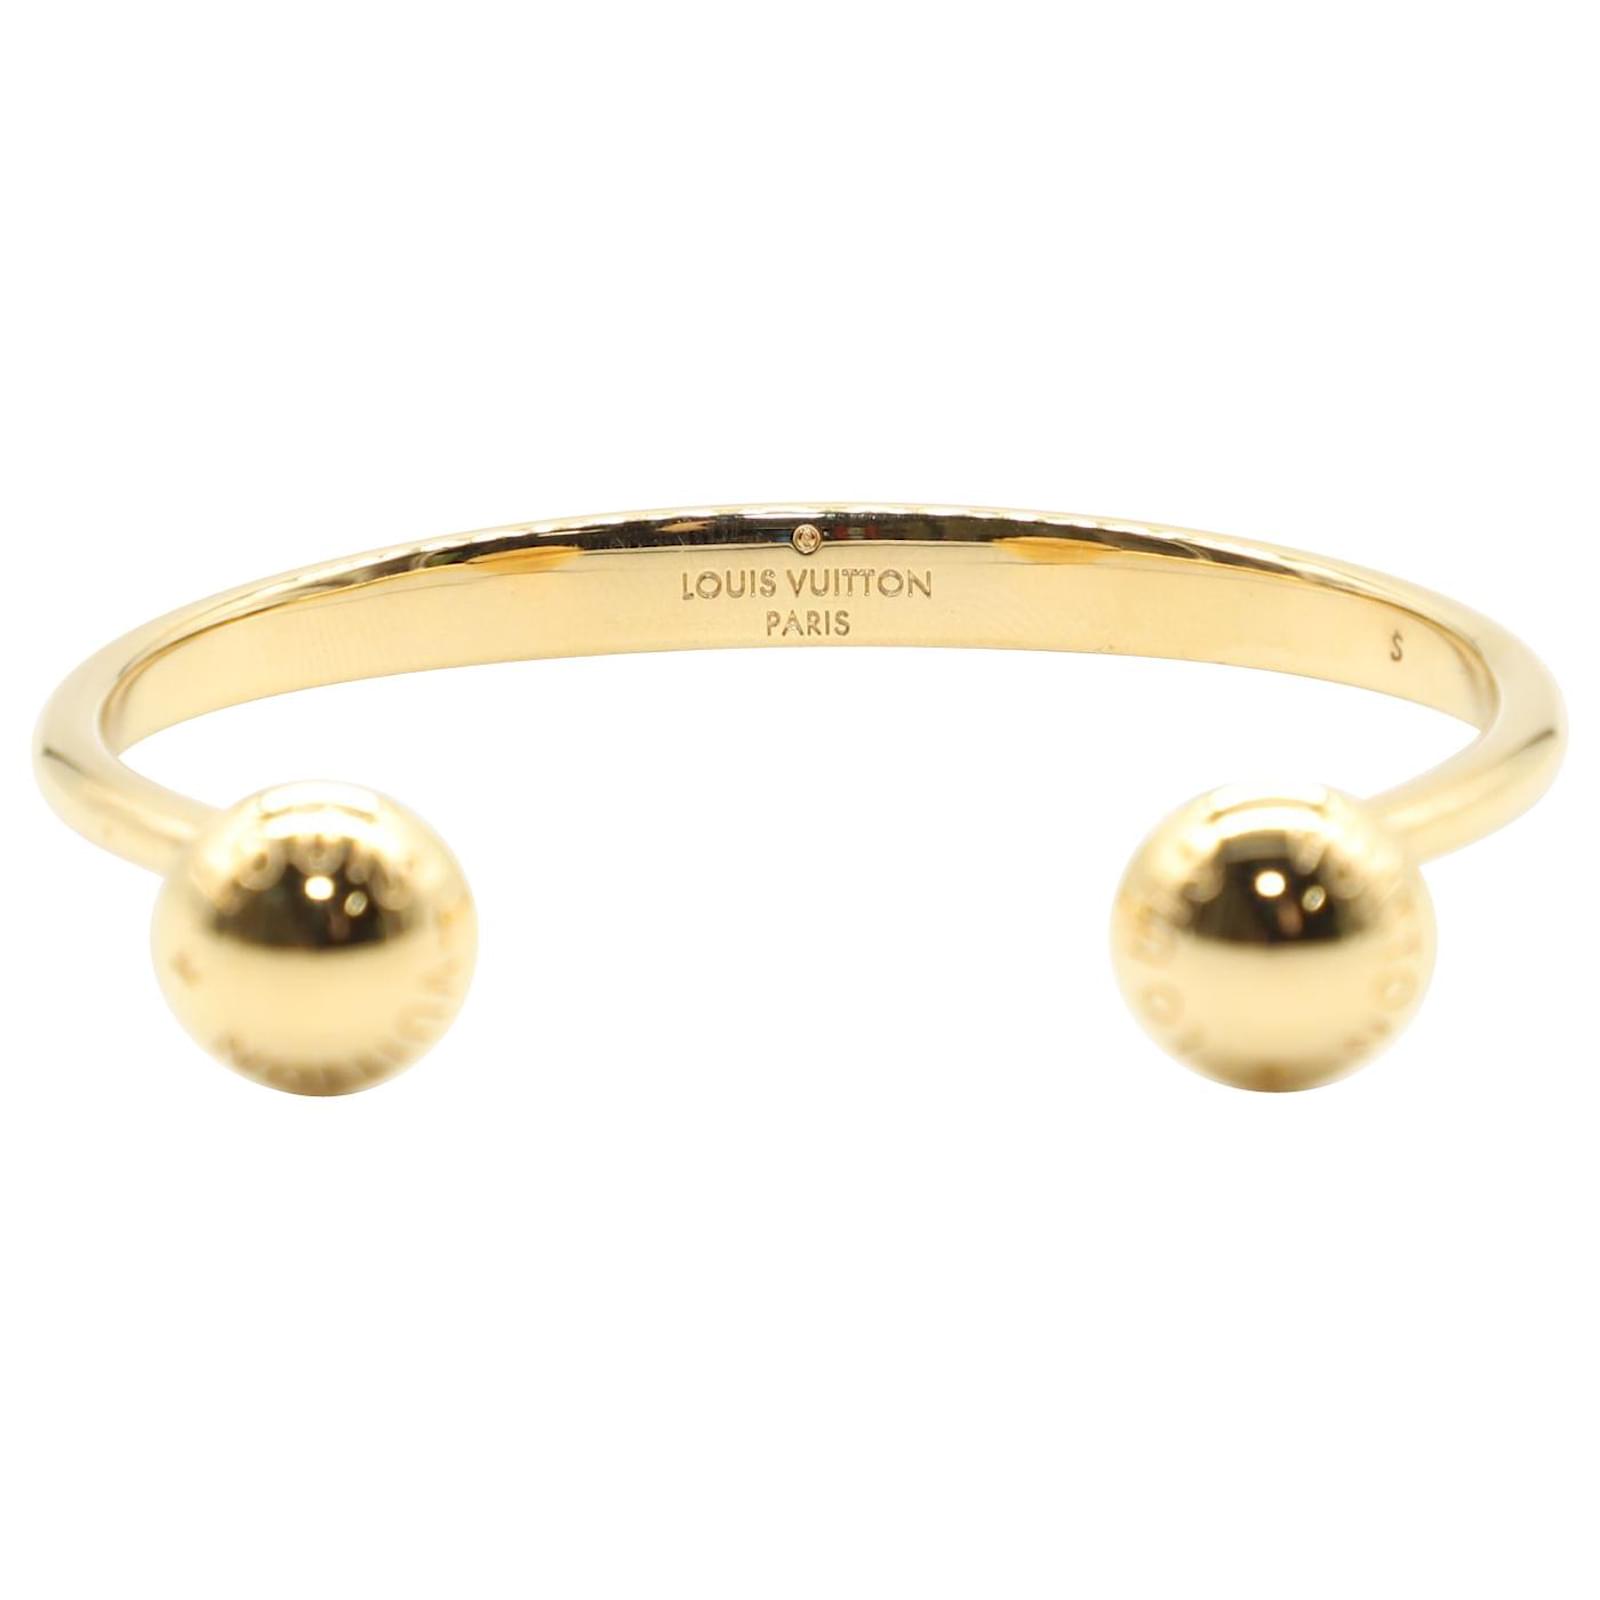 are louis vuitton bracelets real gold